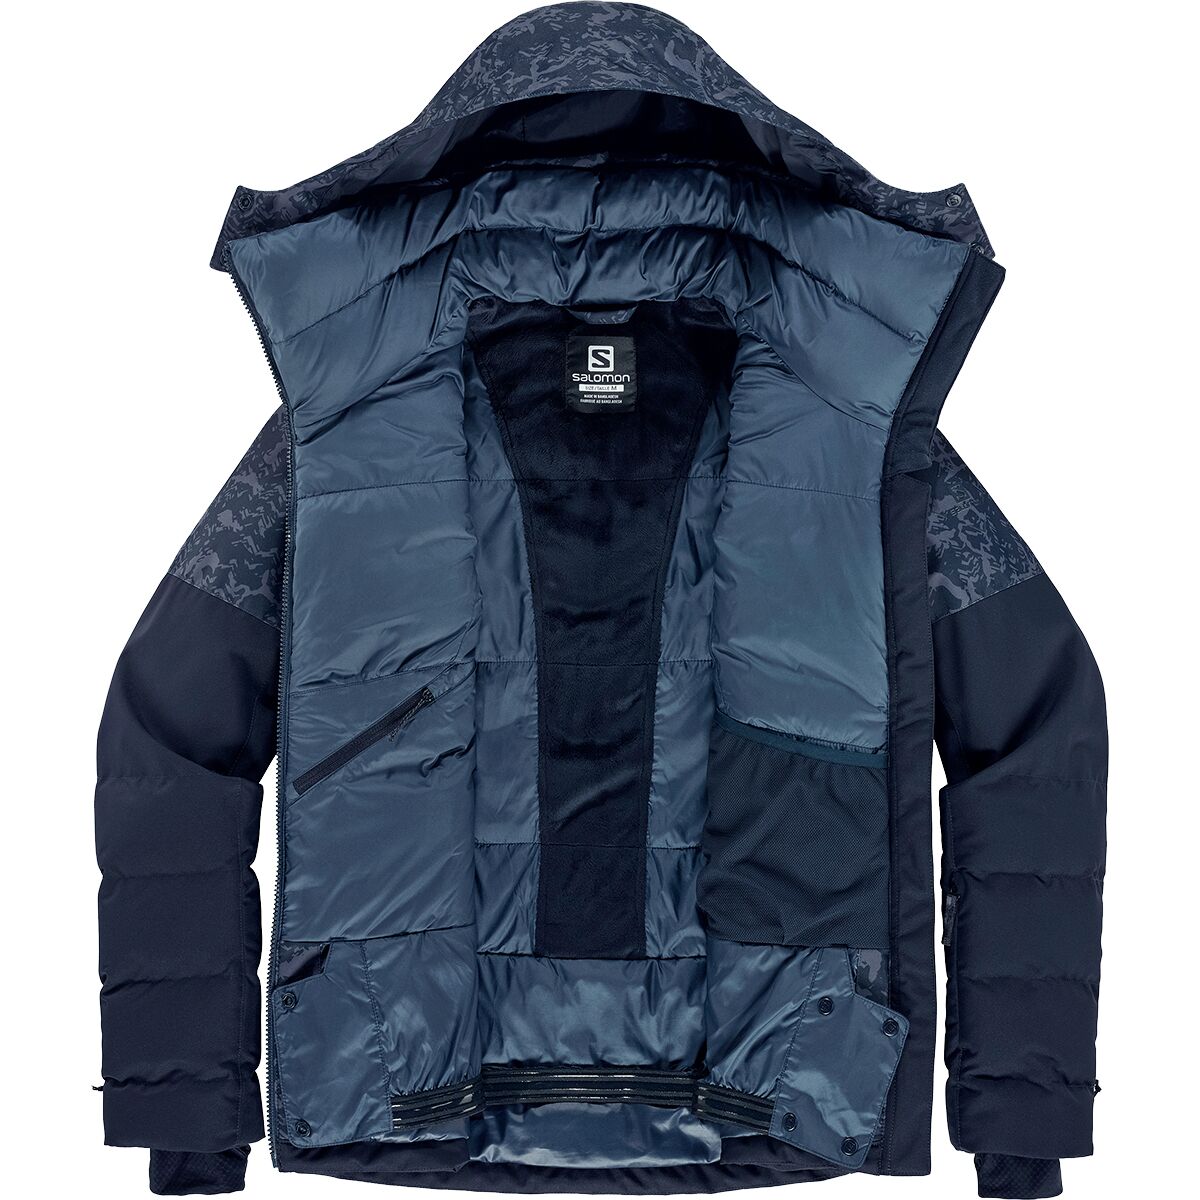 Salomon New Prevail Jkt W - Insulated - Waterproof - Jackets